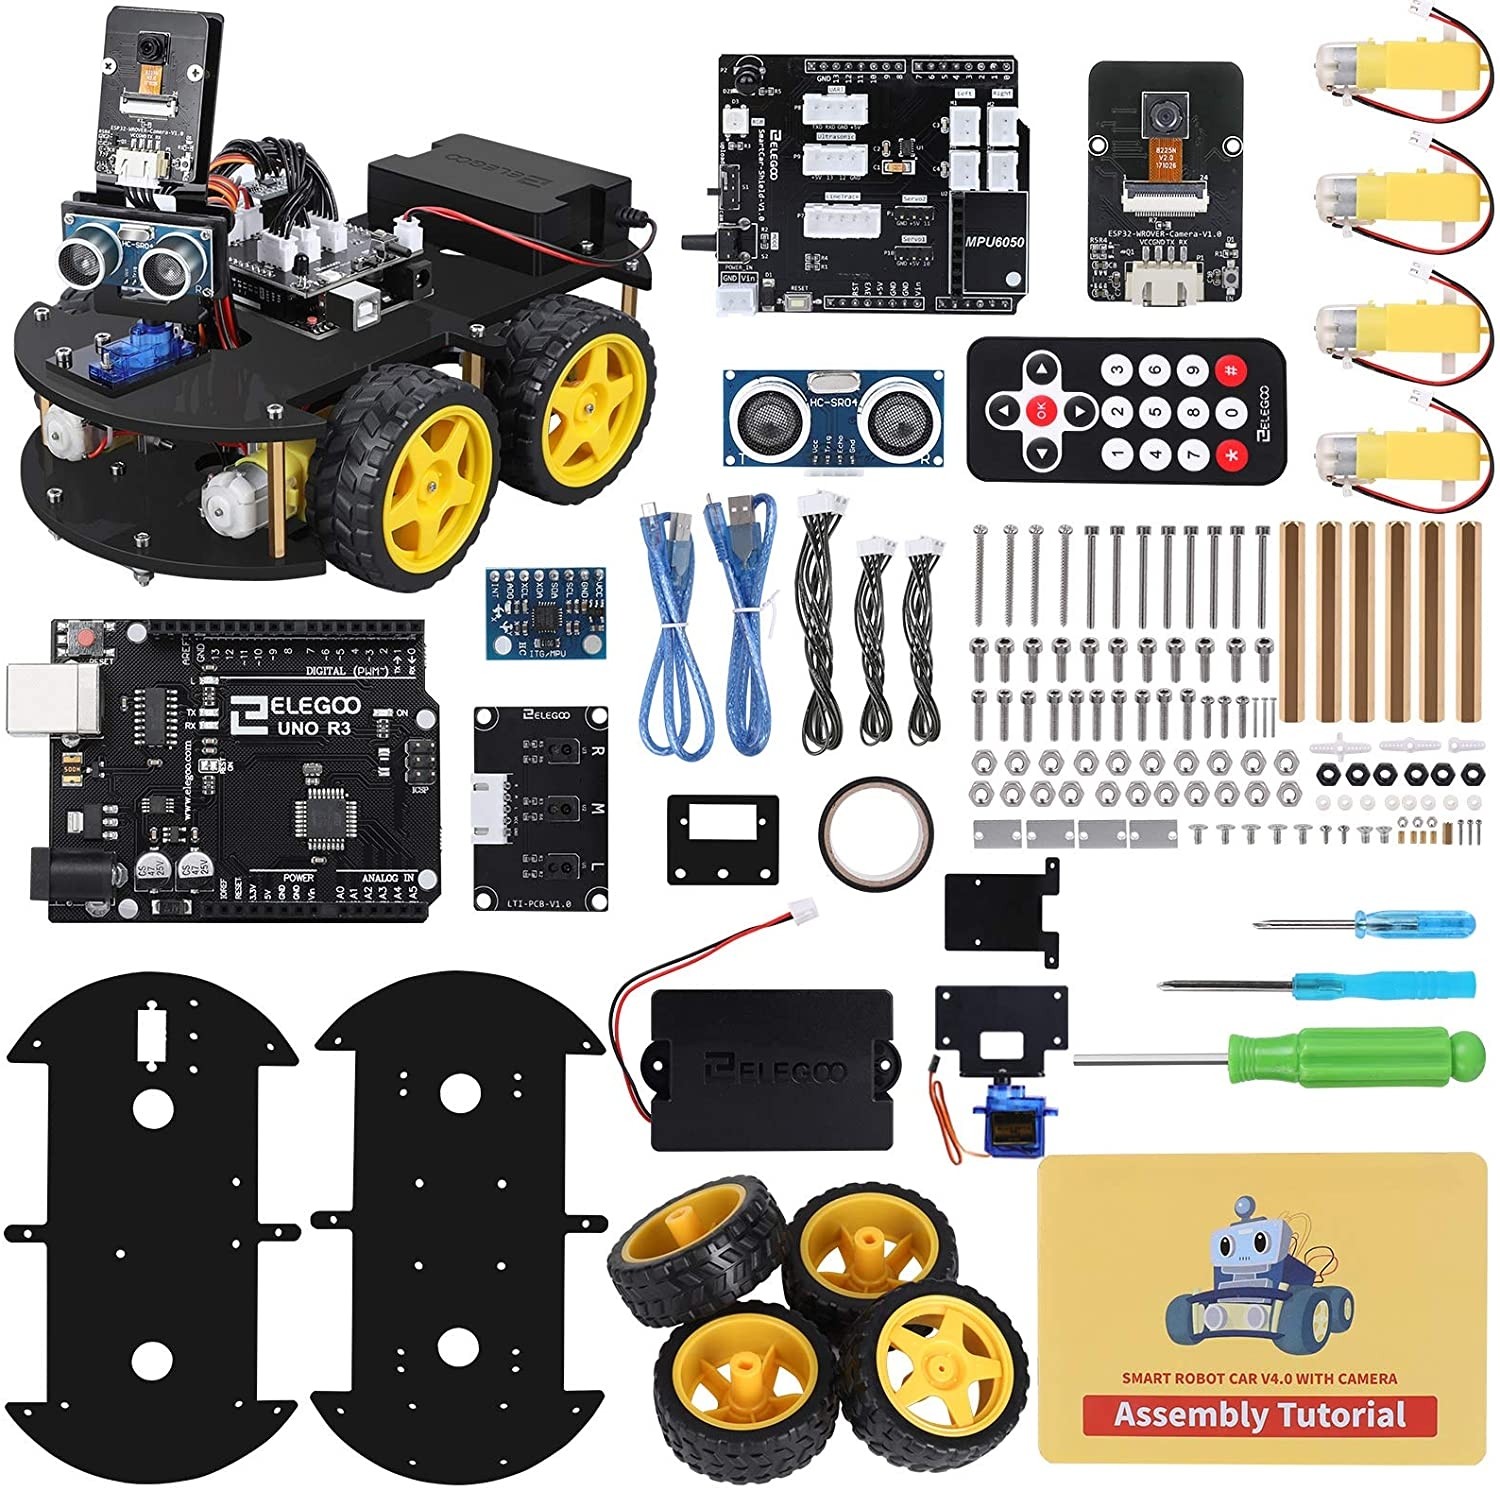 ELEGOO UNO R3 Project Smart Robot Car Kit V 4.0 with Camera